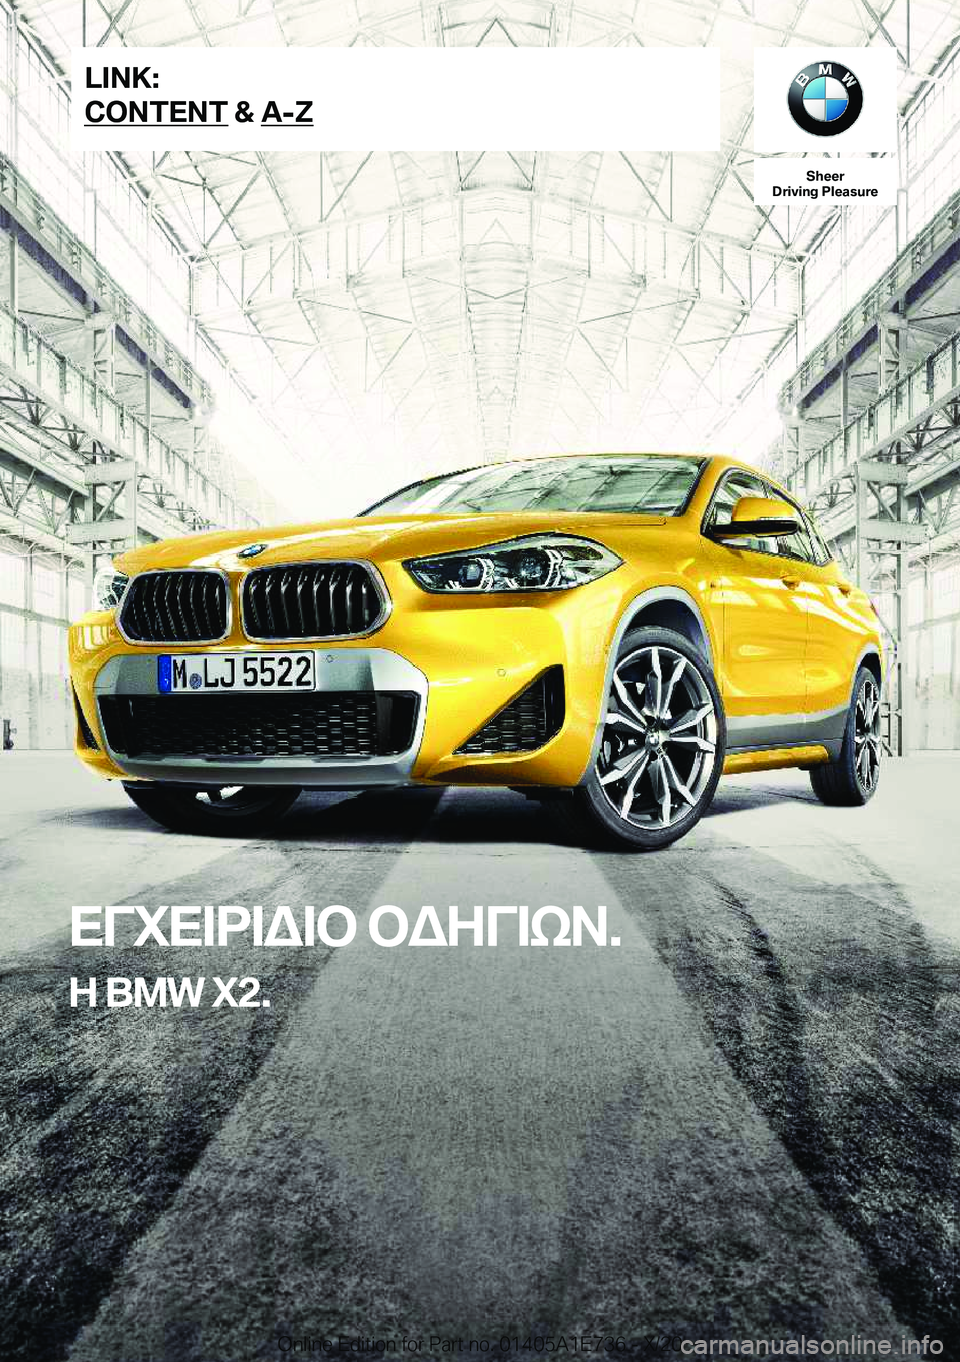 BMW X2 2021  ΟΔΗΓΌΣ ΧΡΉΣΗΣ (in Greek) �S�h�e�e�r
�D�r�i�v�i�n�g��P�l�e�a�s�u�r�e
XViX=d=W=b�bWZV=kA�.
Z��B�M�W��X�2�.�L�I�N�K�:
�C�O�N�T�E�N�T��&��A�-�Z�O�n�l�i�n�e��E�d�i�t�i�o�n��f�o�r��P�a�r�t��n�o�.��0�1�4